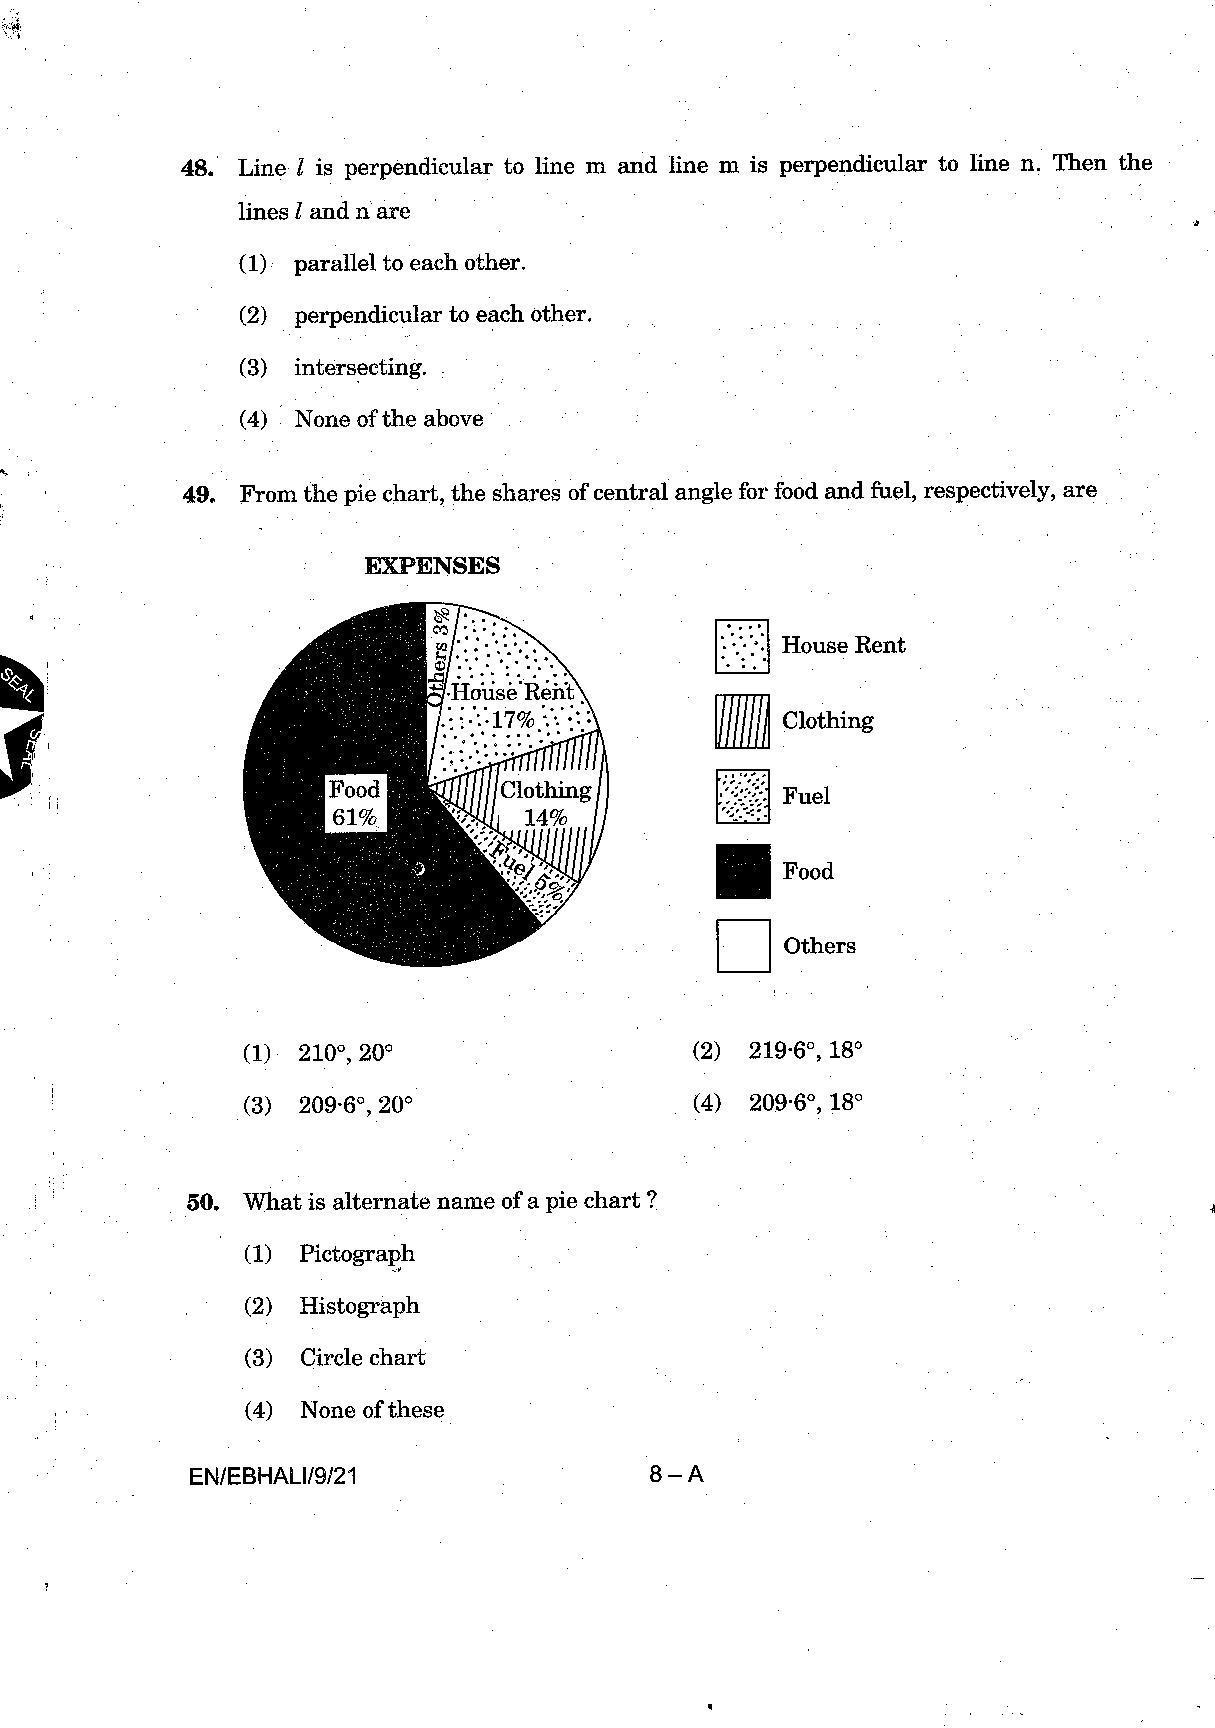 Sainik School Class 9 Question Paper 2021 in English - Page 8